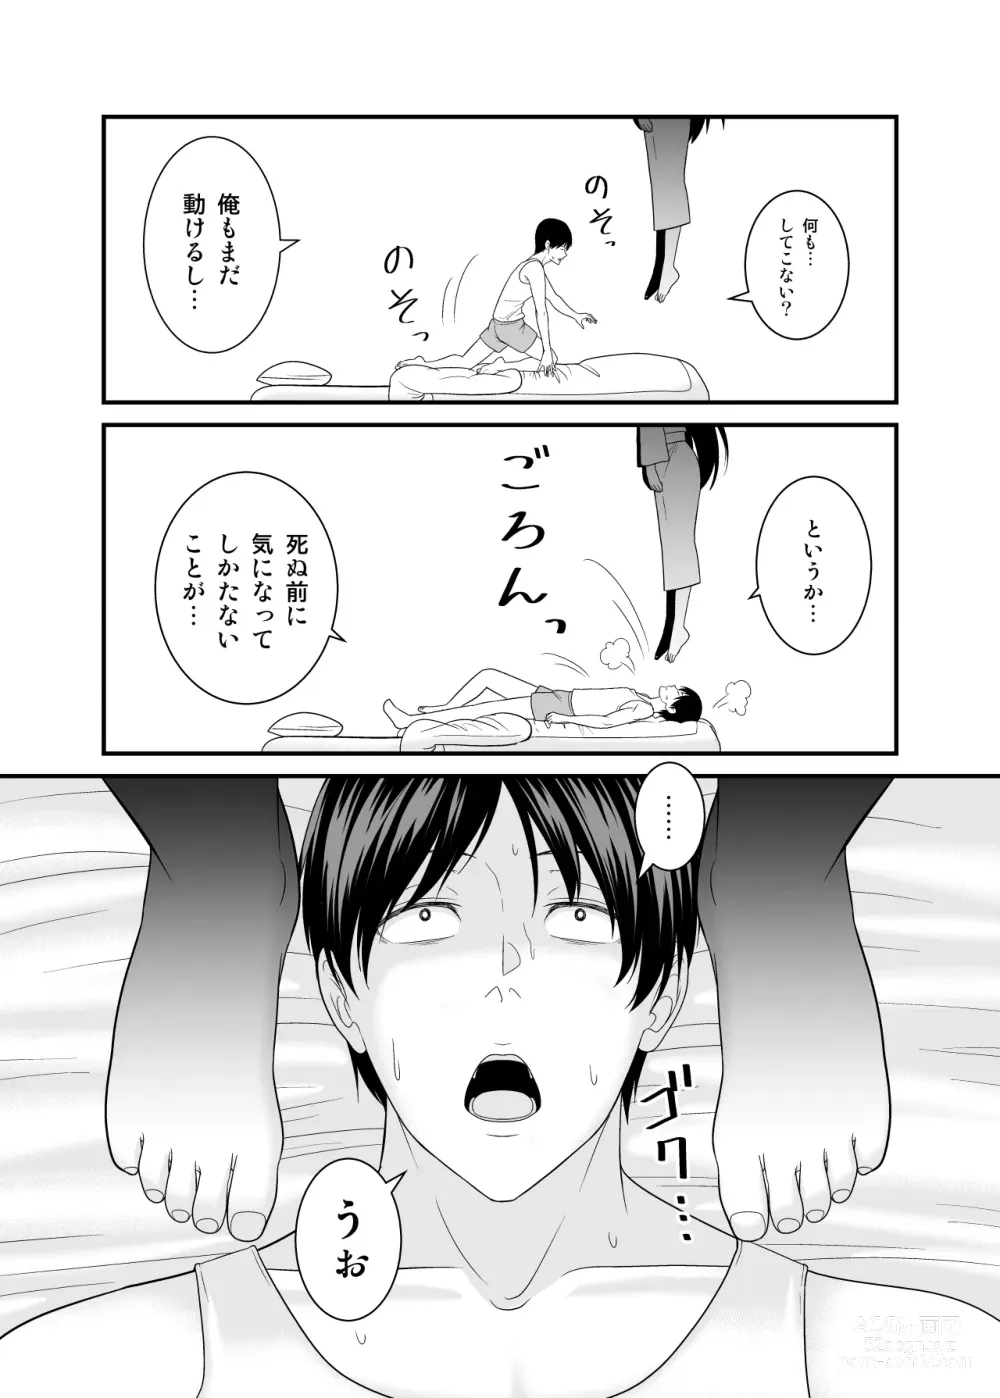 Page 10 of doujinshi ヤバい事故物件に女幽霊が出たけど無職底辺の俺はセックスしまくる